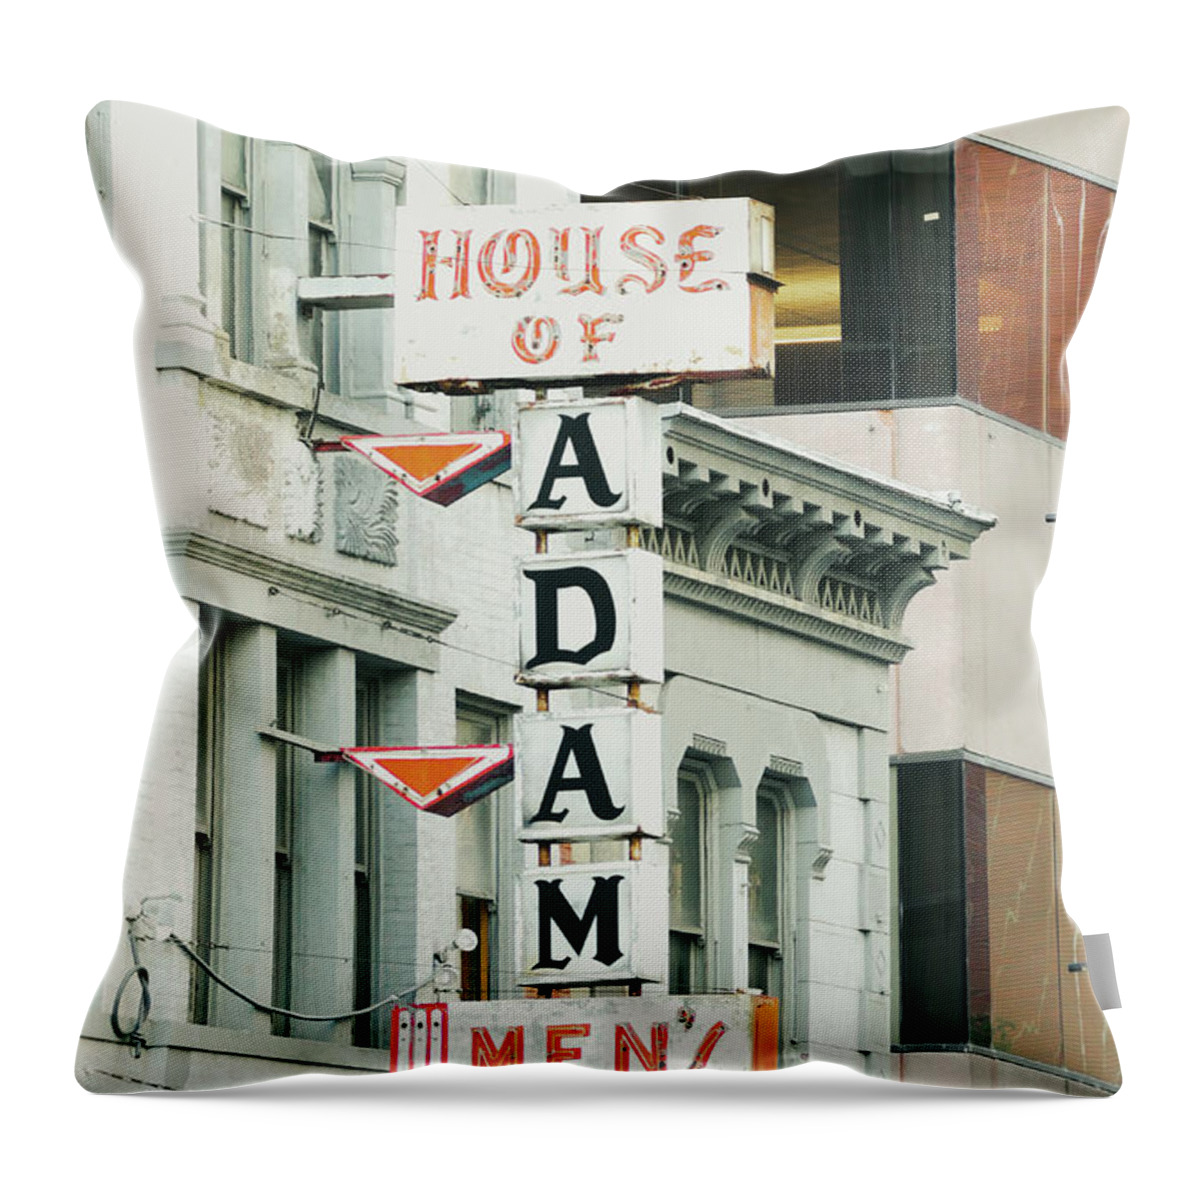 House Of Adam Throw Pillow featuring the photograph House of Adam Men's Wear Sign by Bentley Davis